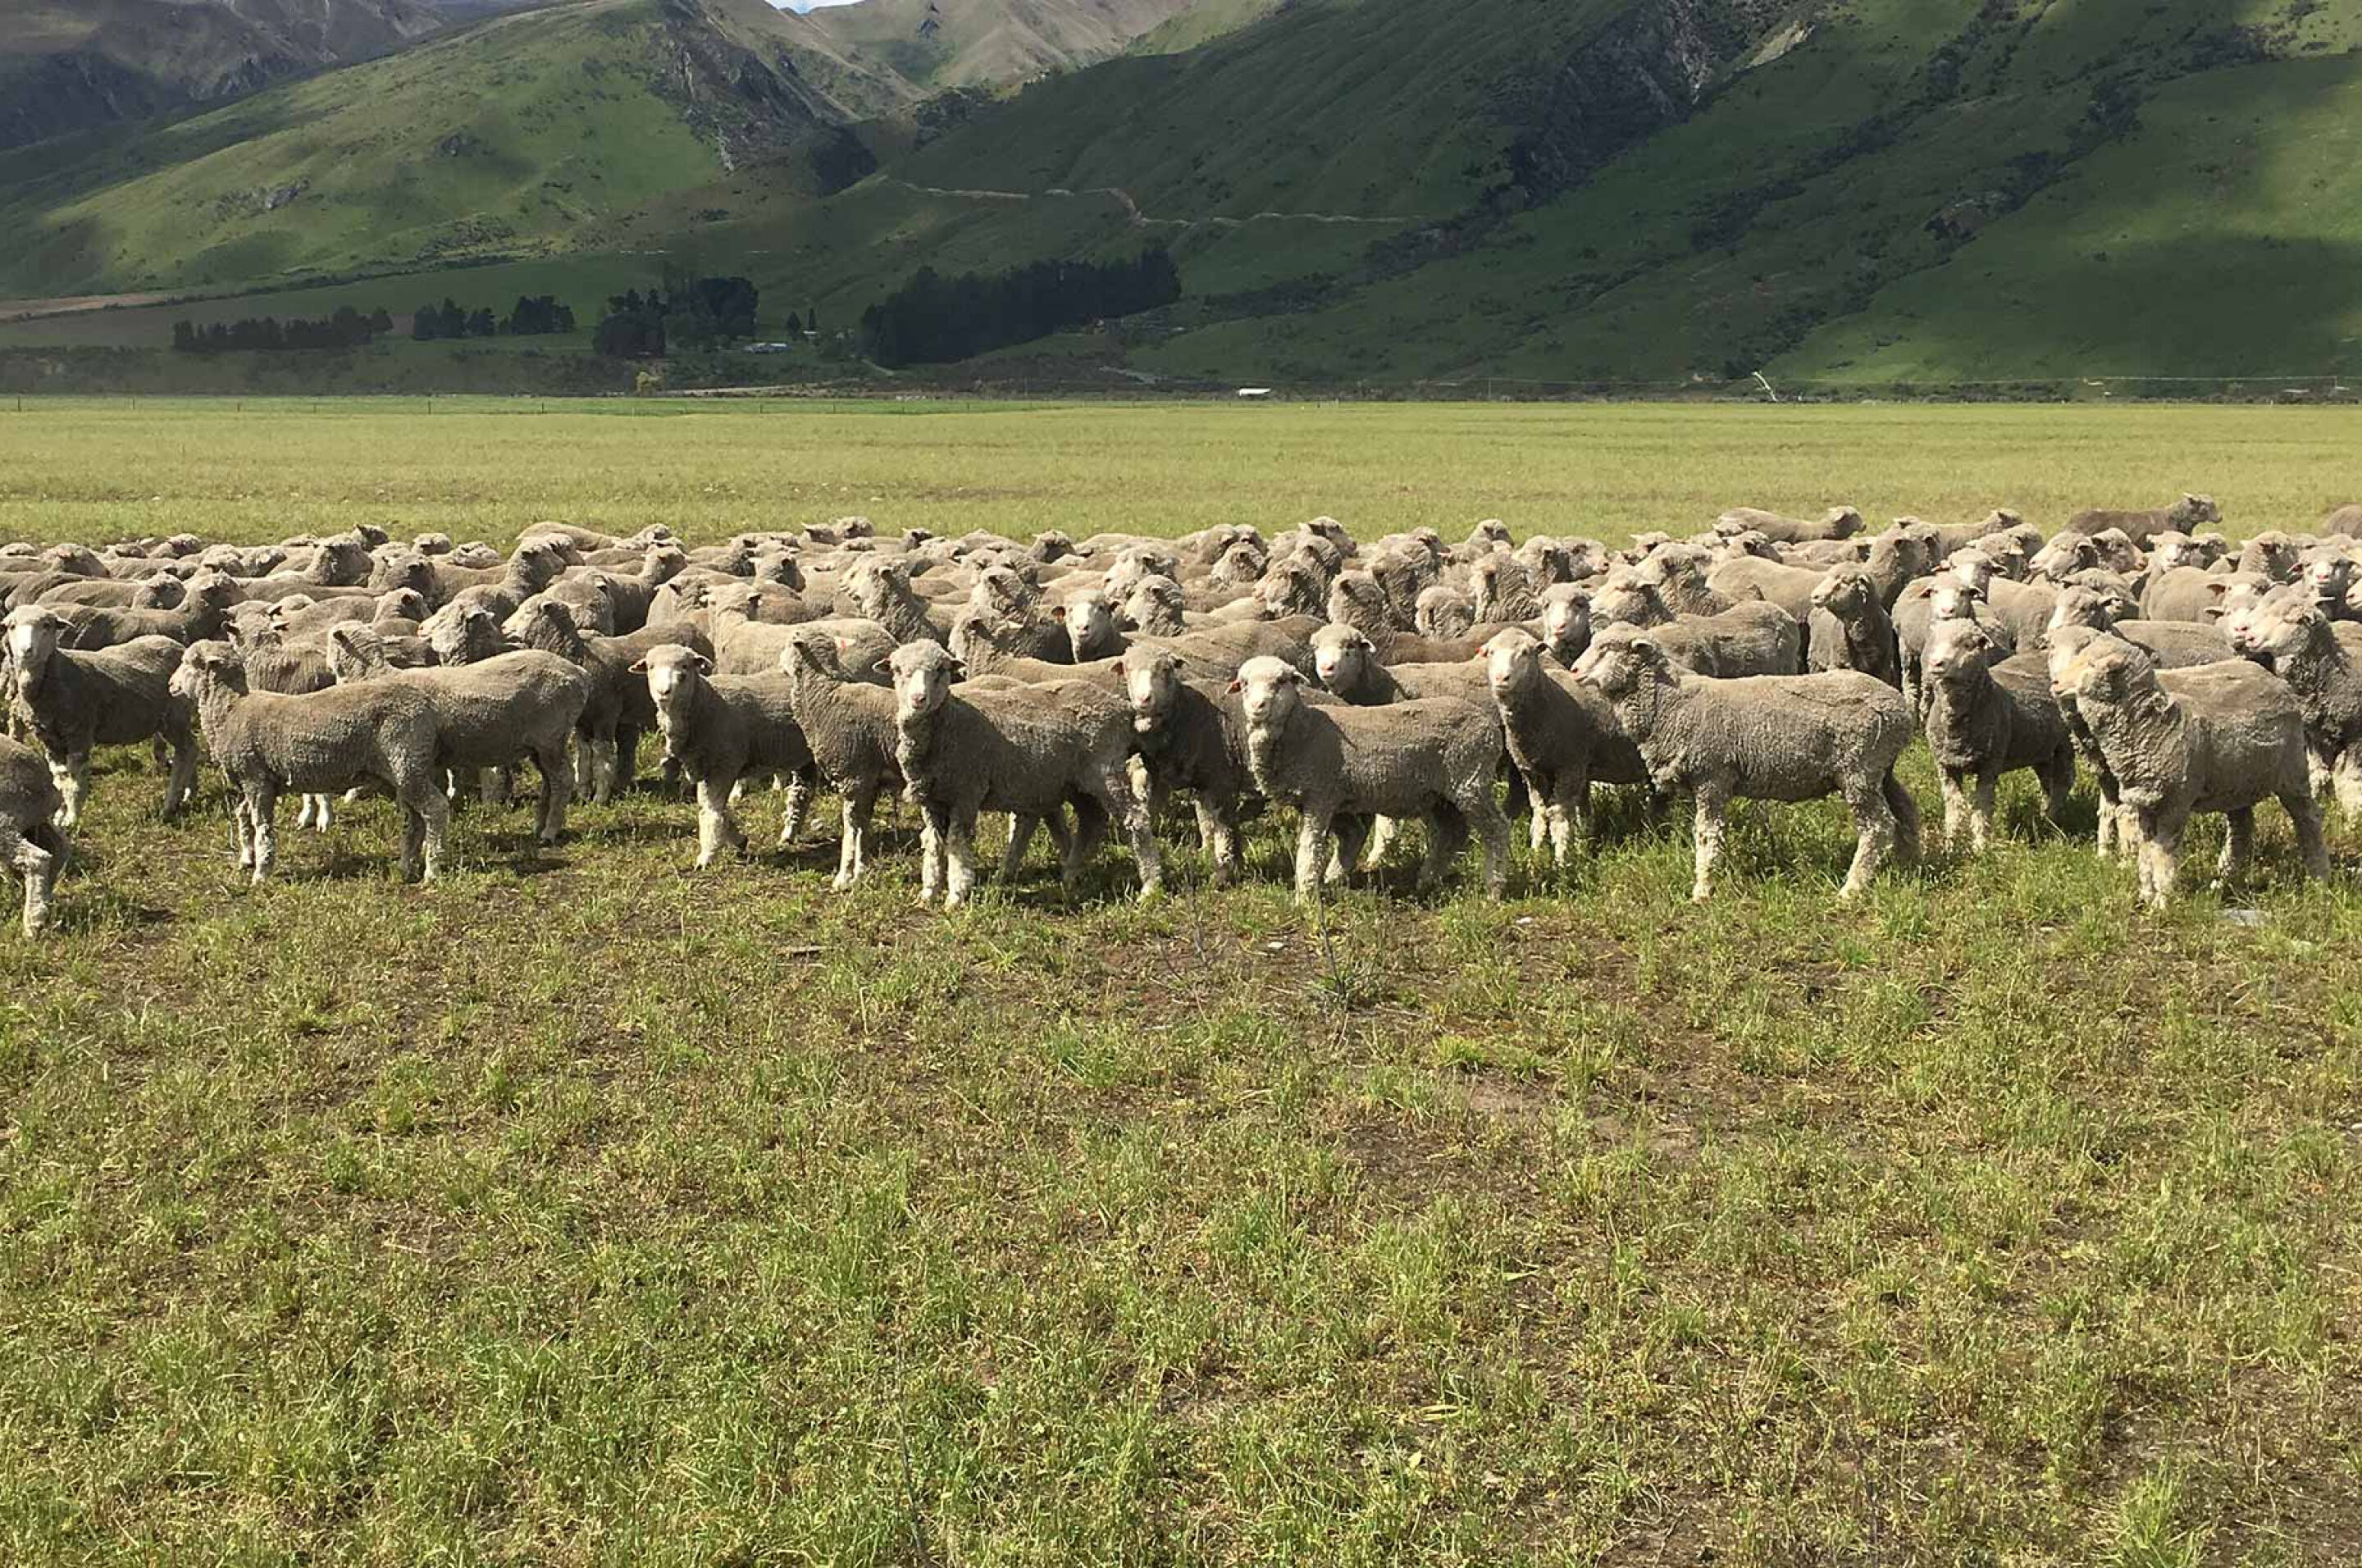 Flock of sheep in a field.